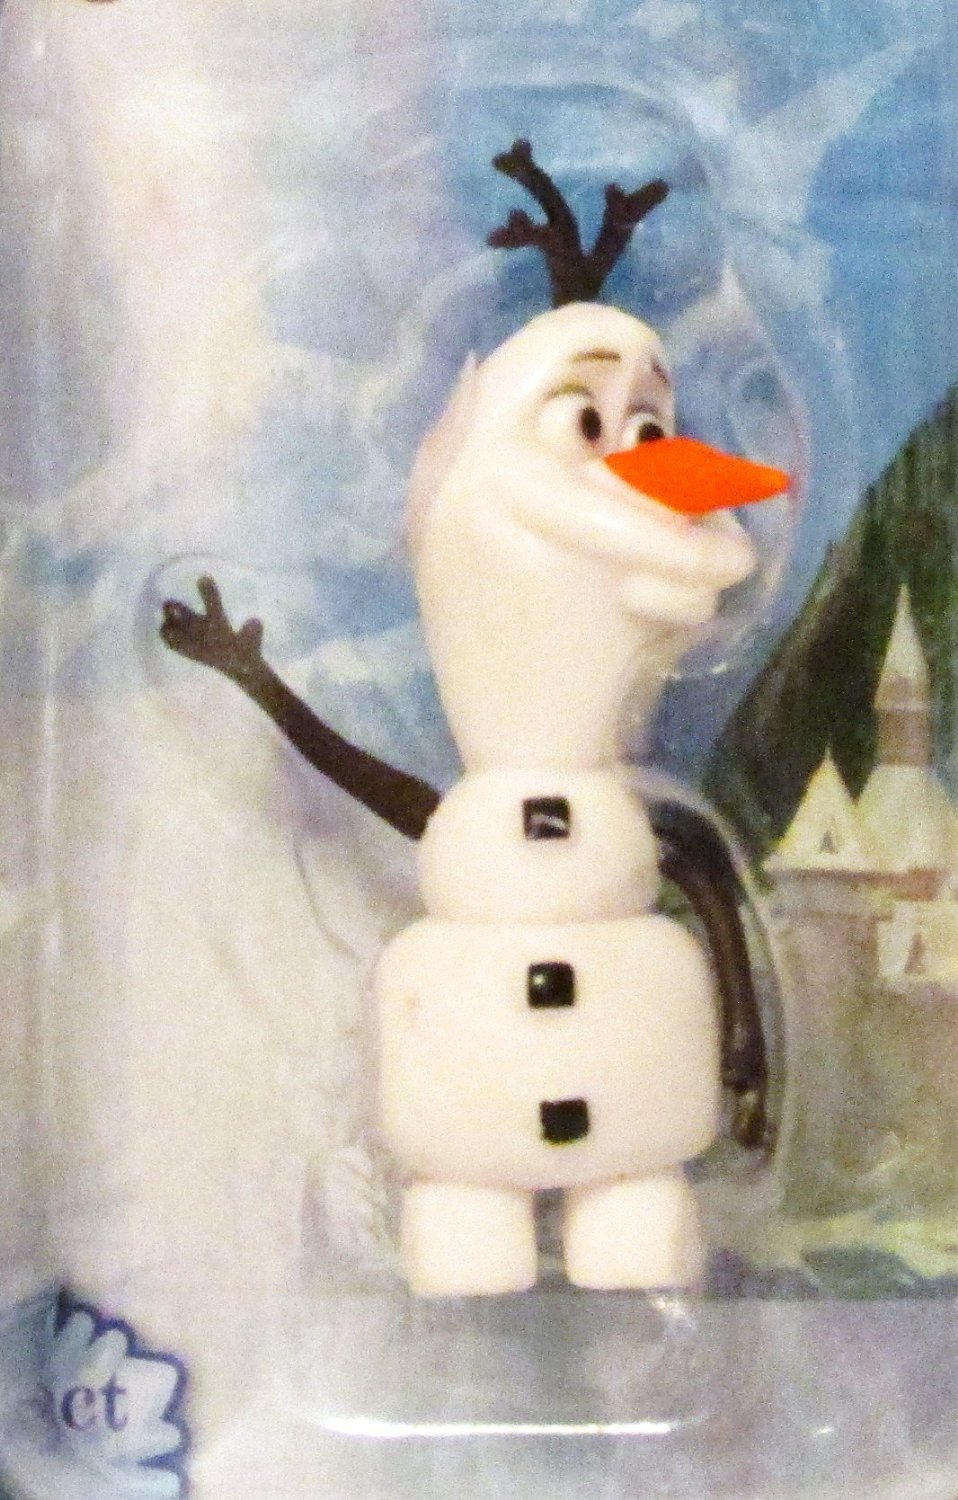 Disney Frozen 2" Figure 48ct Box